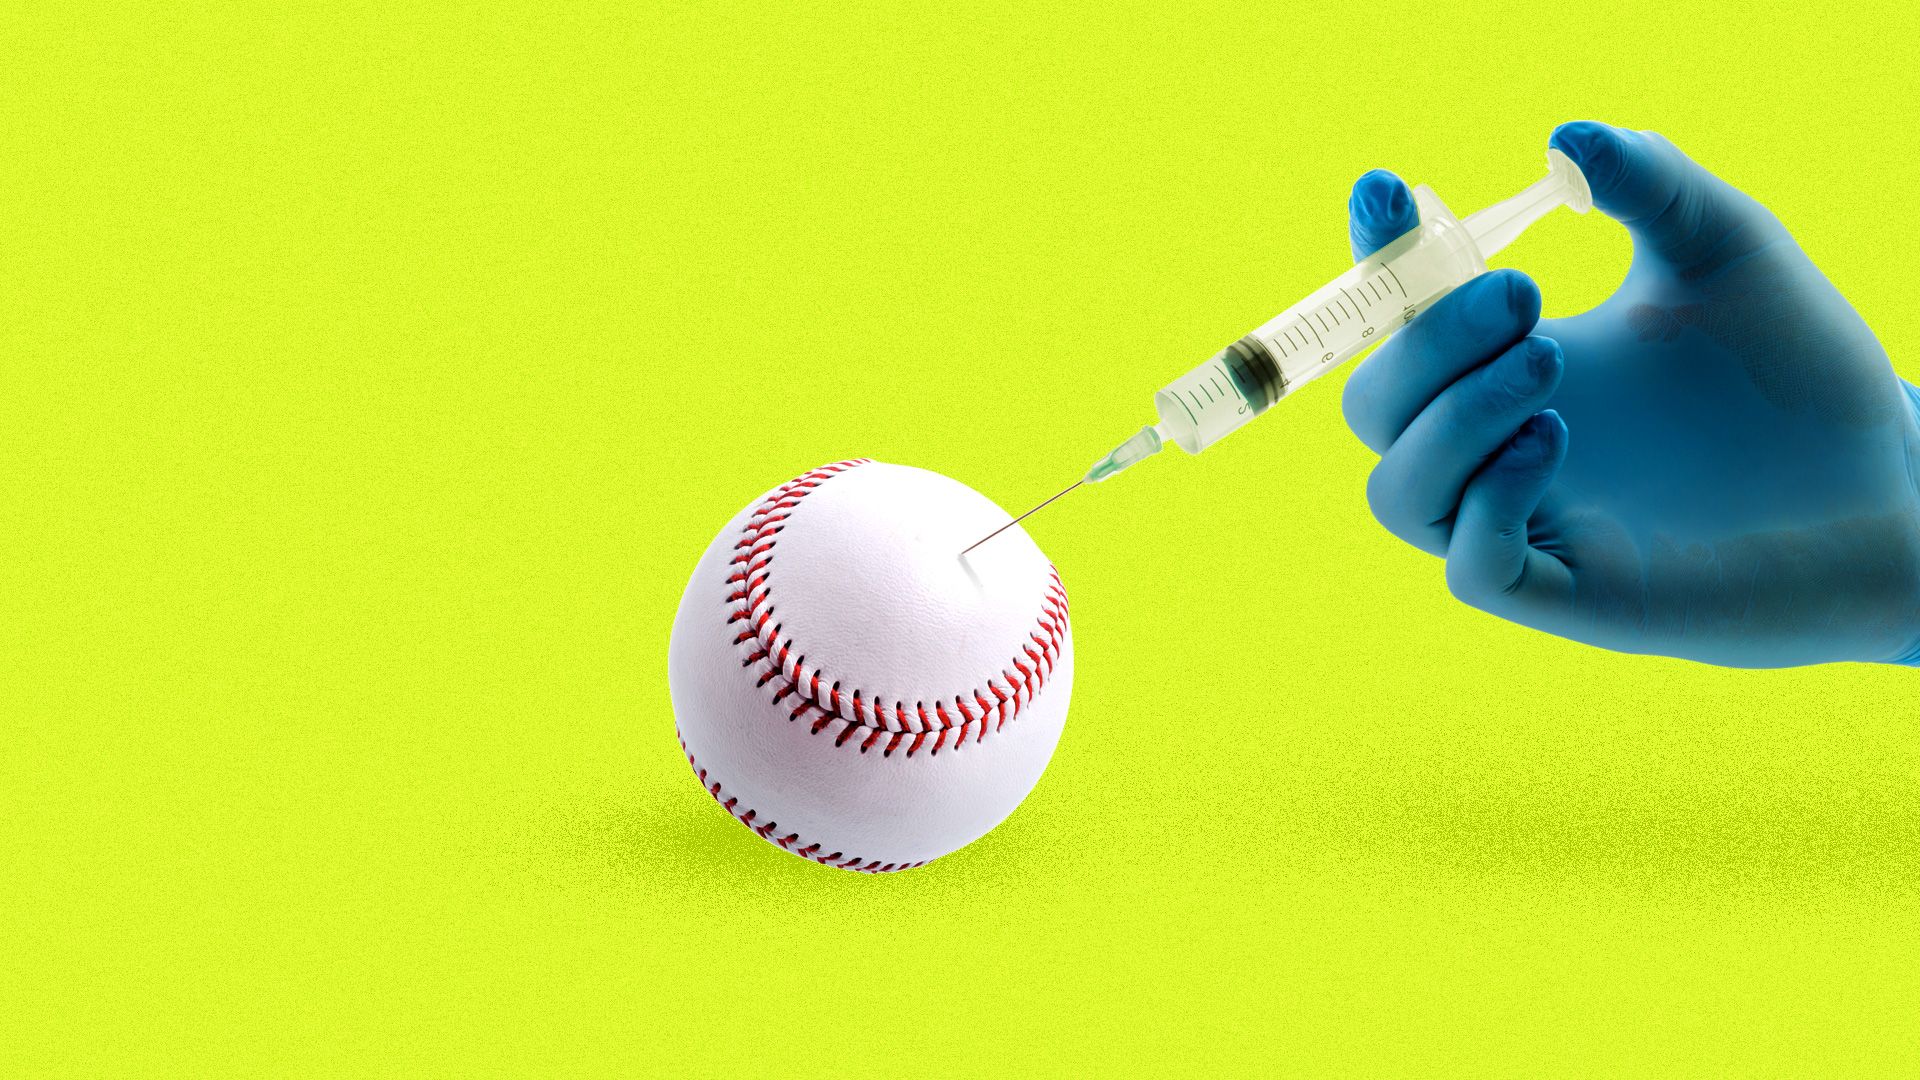 A baseball being juiced